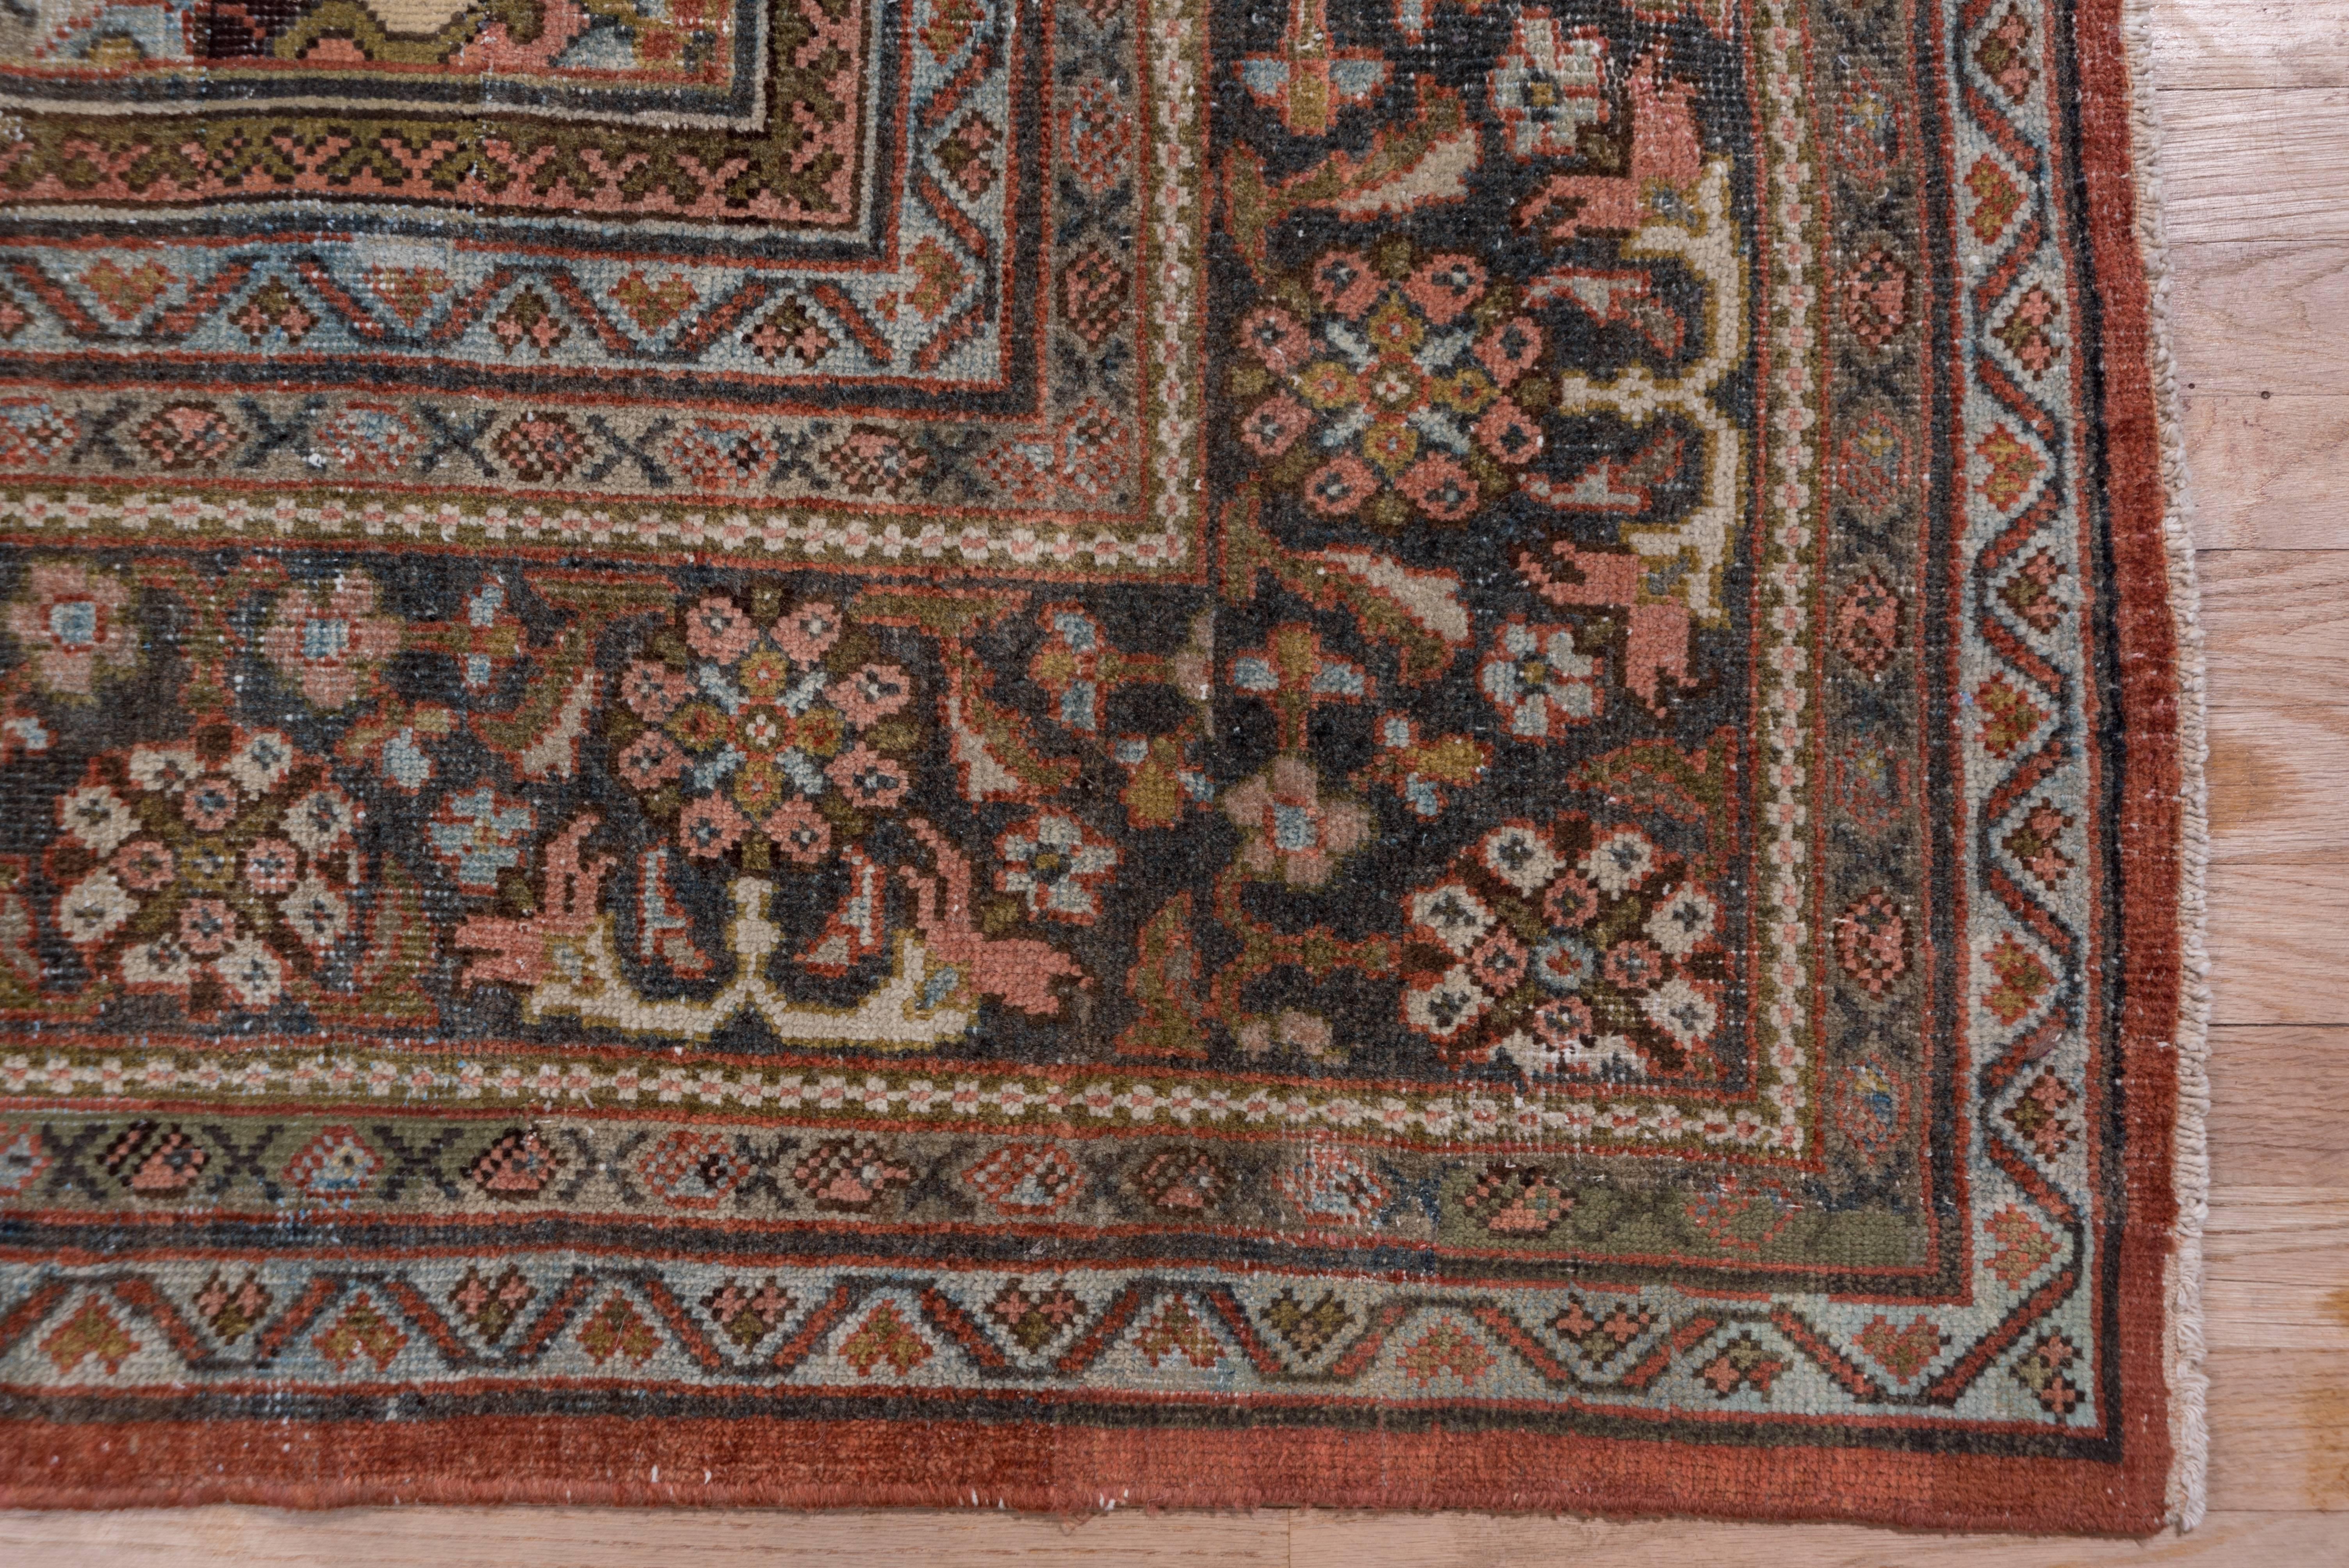 Tribal Antique Persian Mahal Carpet, Circa 1920s